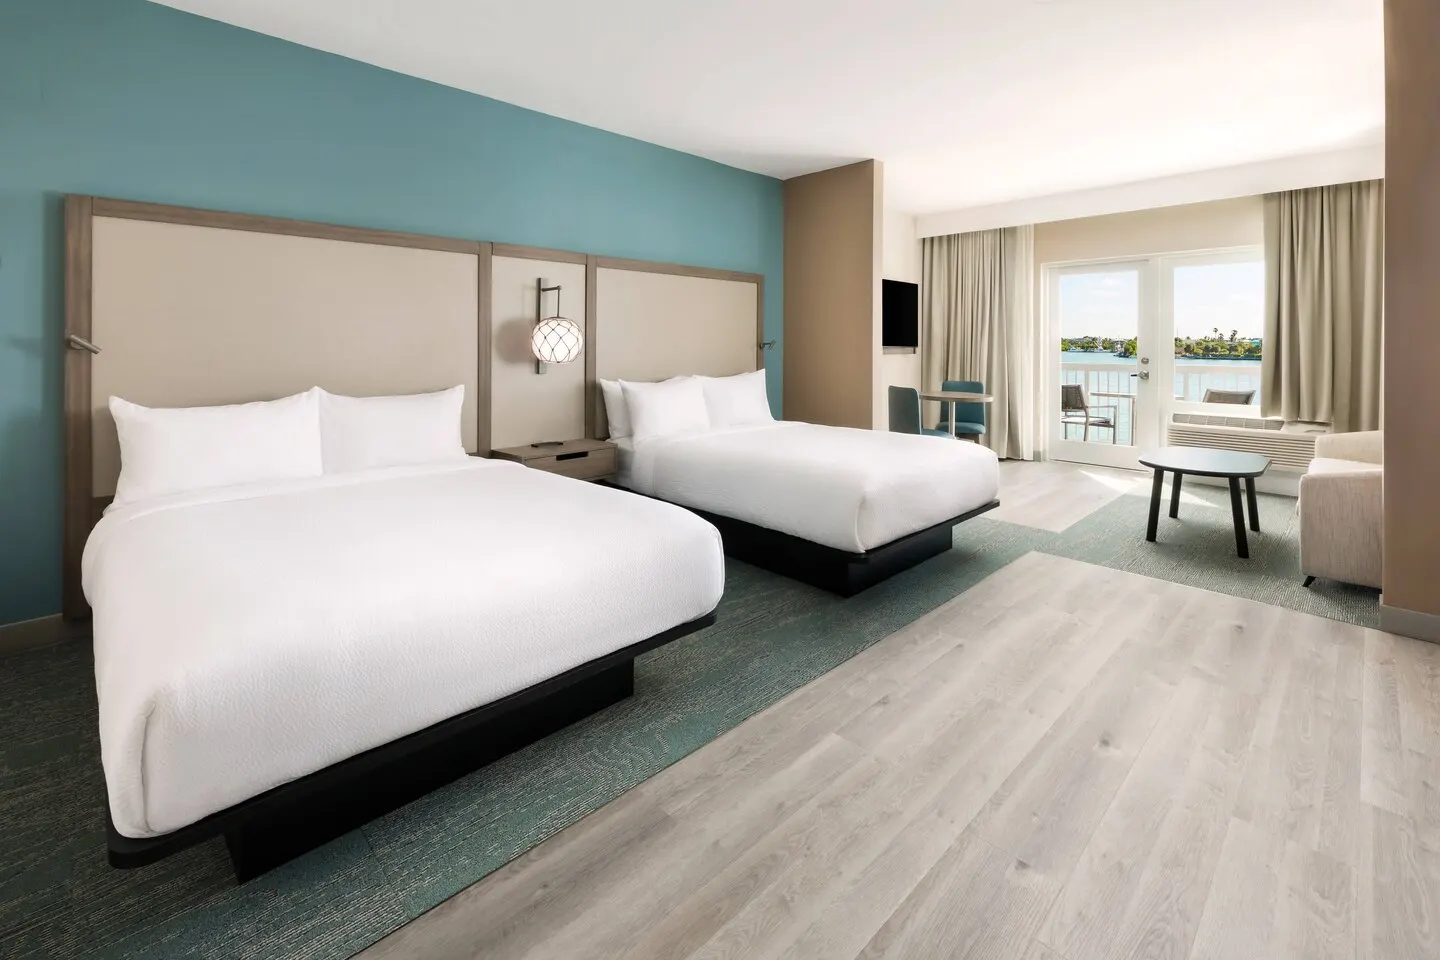 GRT6531 Modern New Design Hotel Furniture Marriott Fairfield Inn& Suites Bedroom Sets Luxury King Queen Furniture Hotel